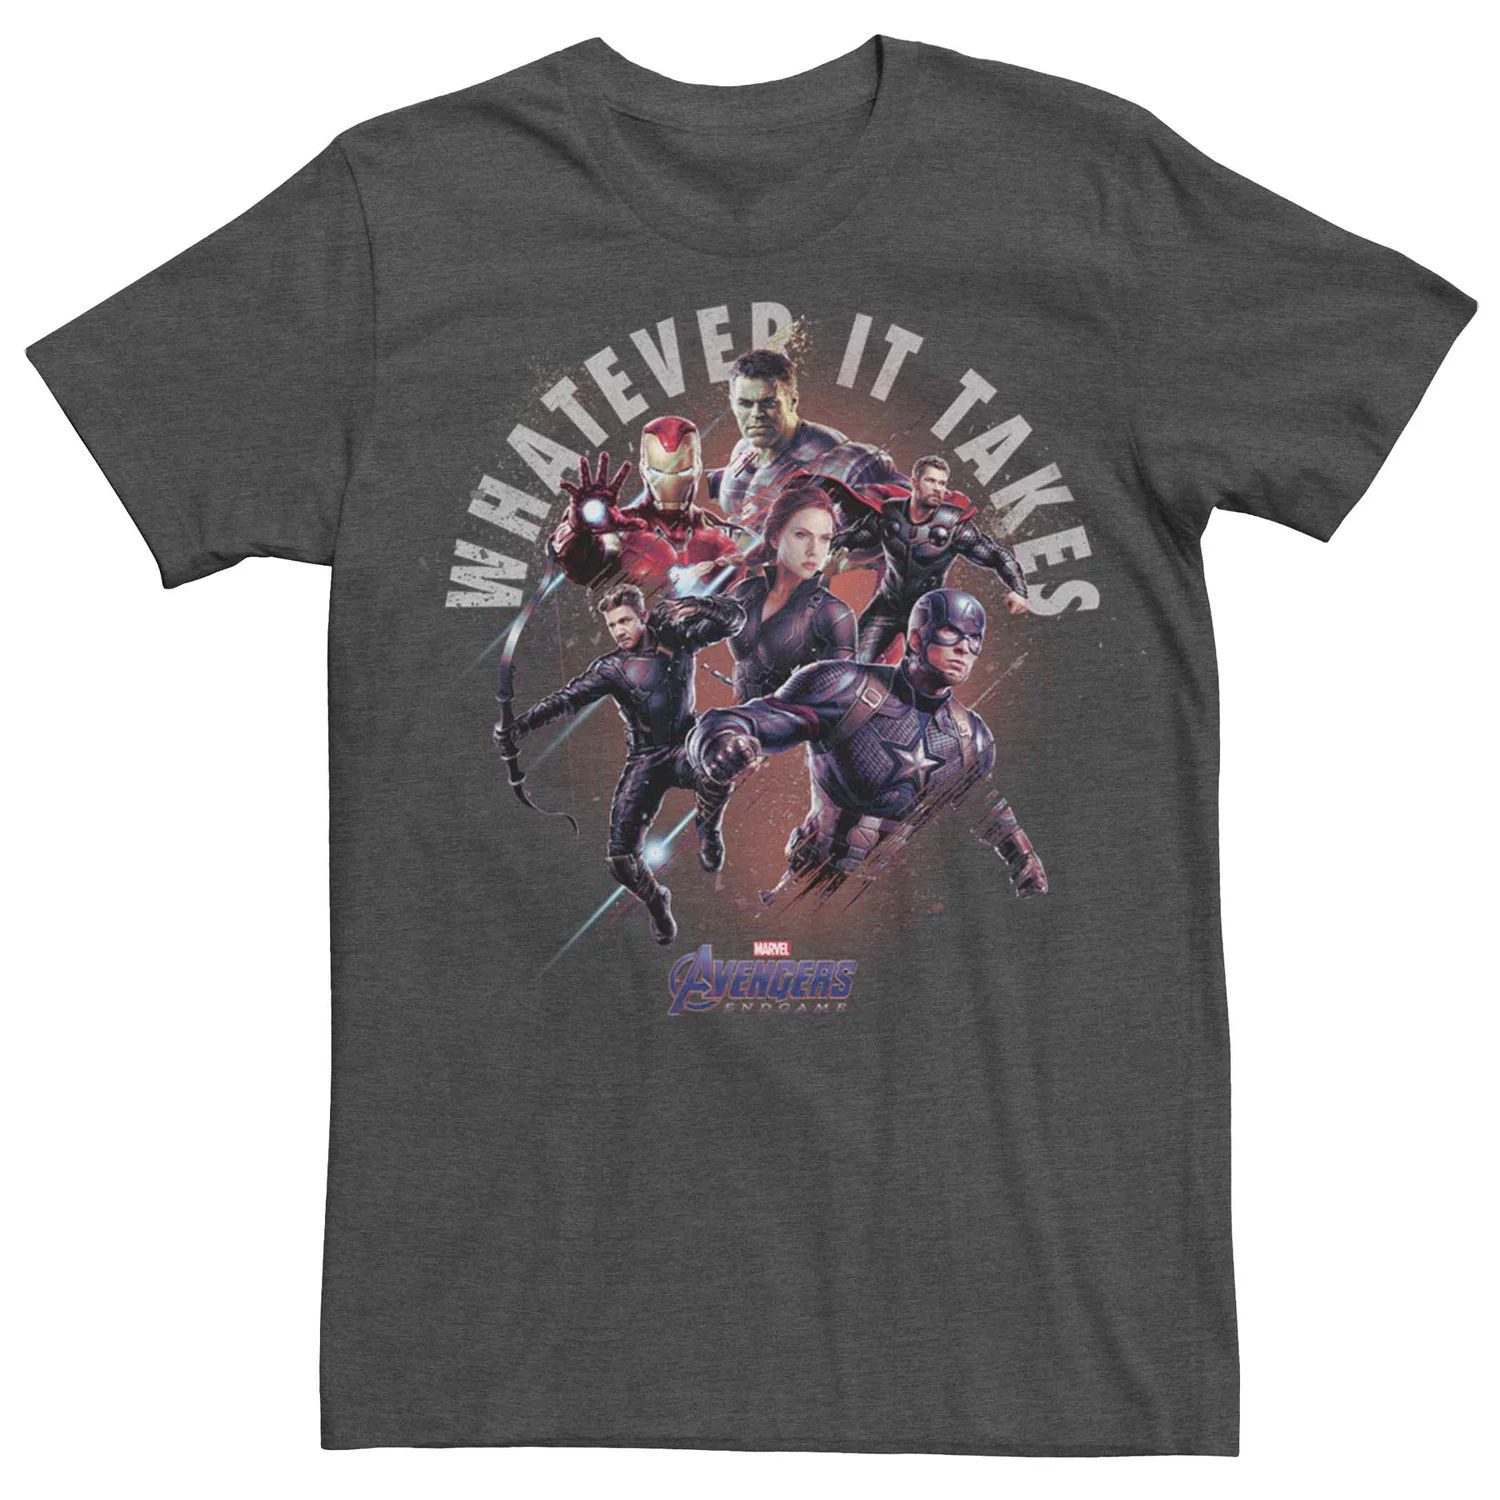 Мужская футболка Marvel Avengers Endgame «Во что бы то ни стало», групповая фотография Licensed Character мужская футболка с плакатом marvel iron man во что бы то ни стало licensed character